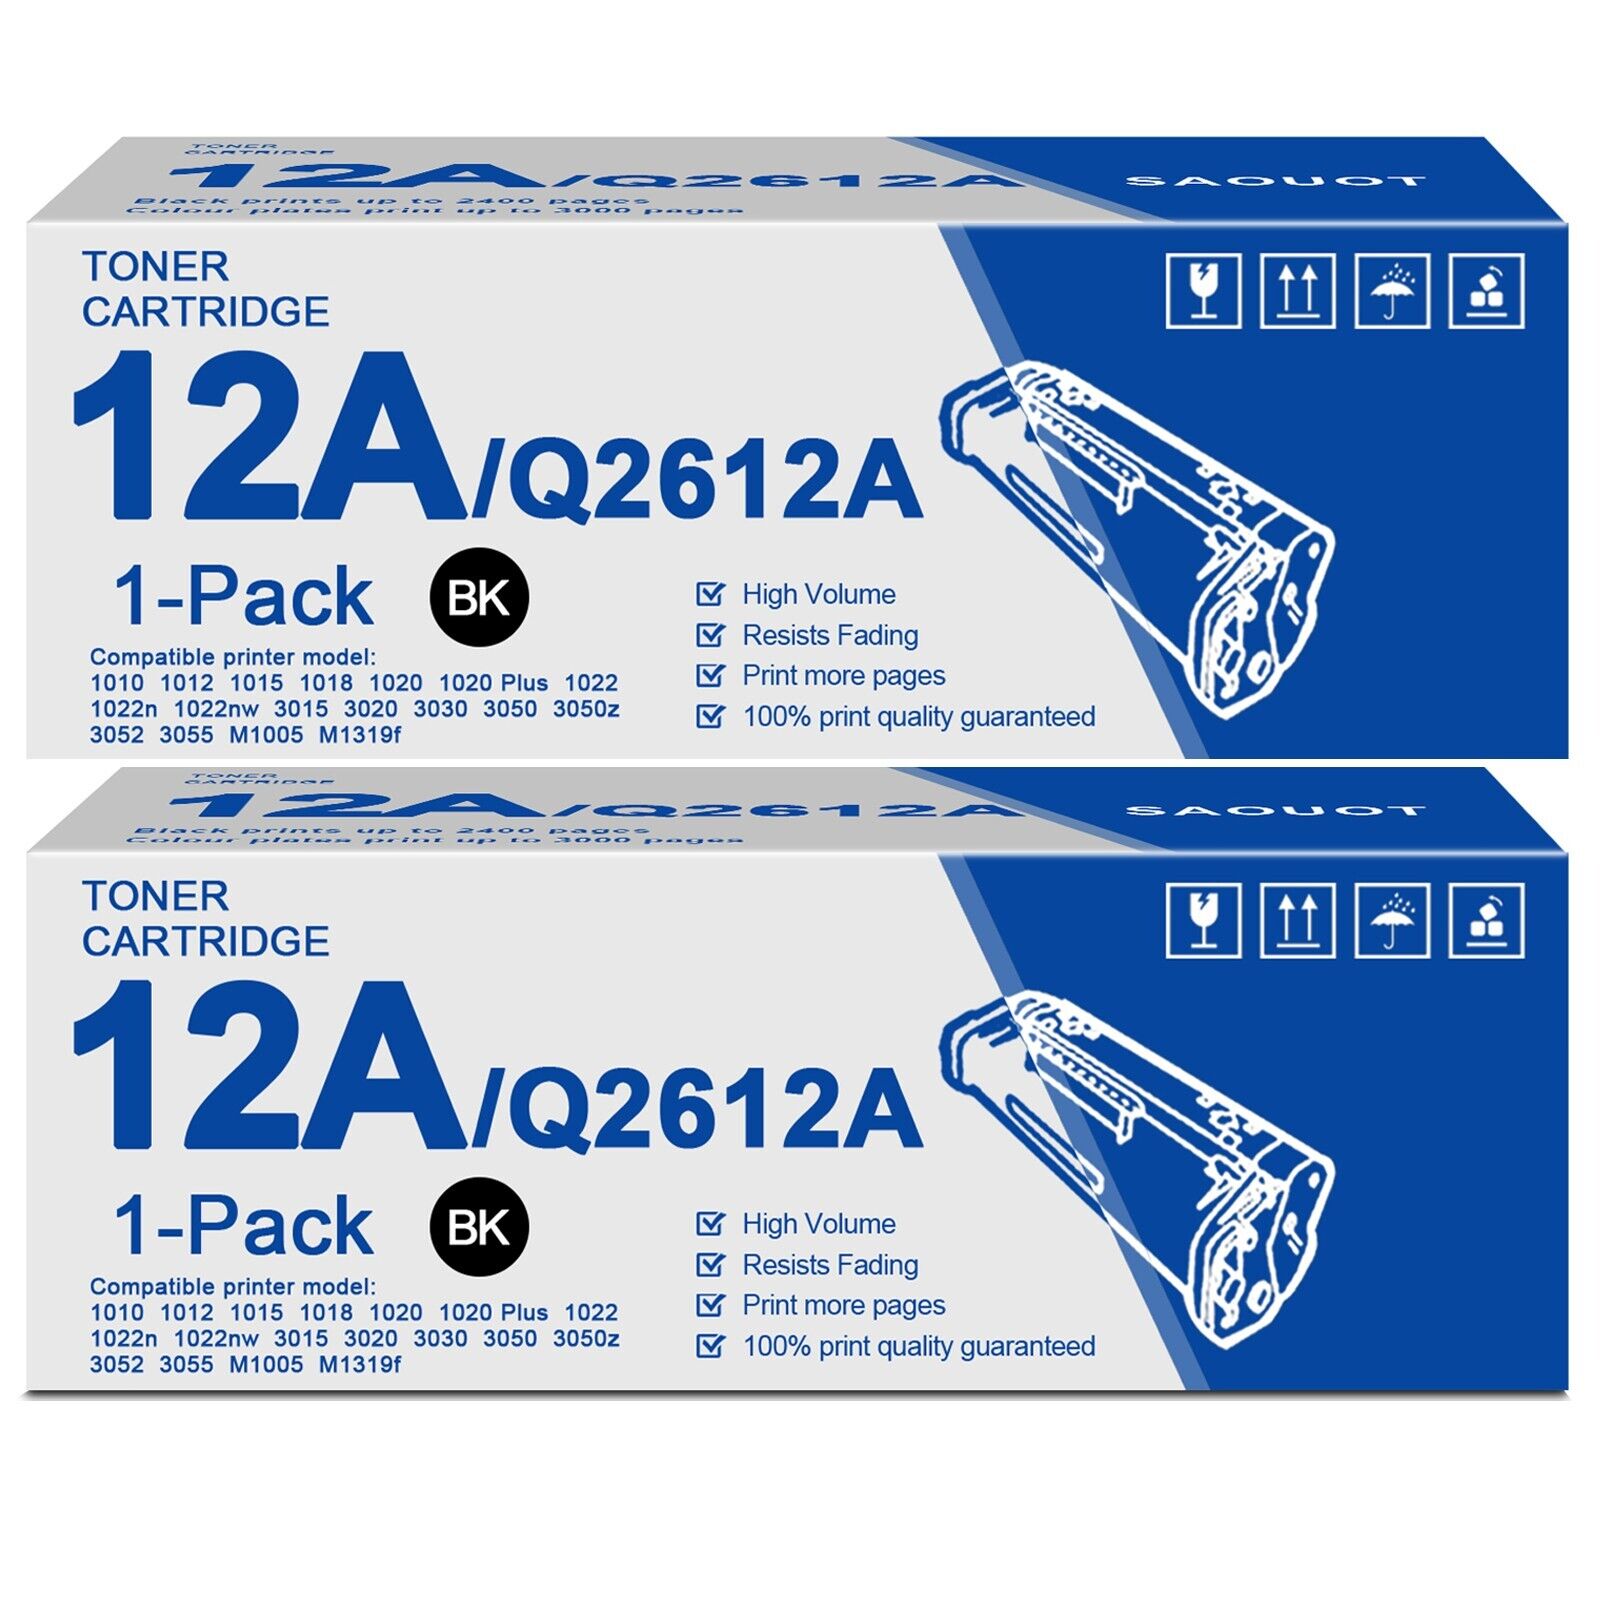 12A | Q2612D Toner Cartridge Replacement for HP Q2612A 1010 1020 3015, 2 Black